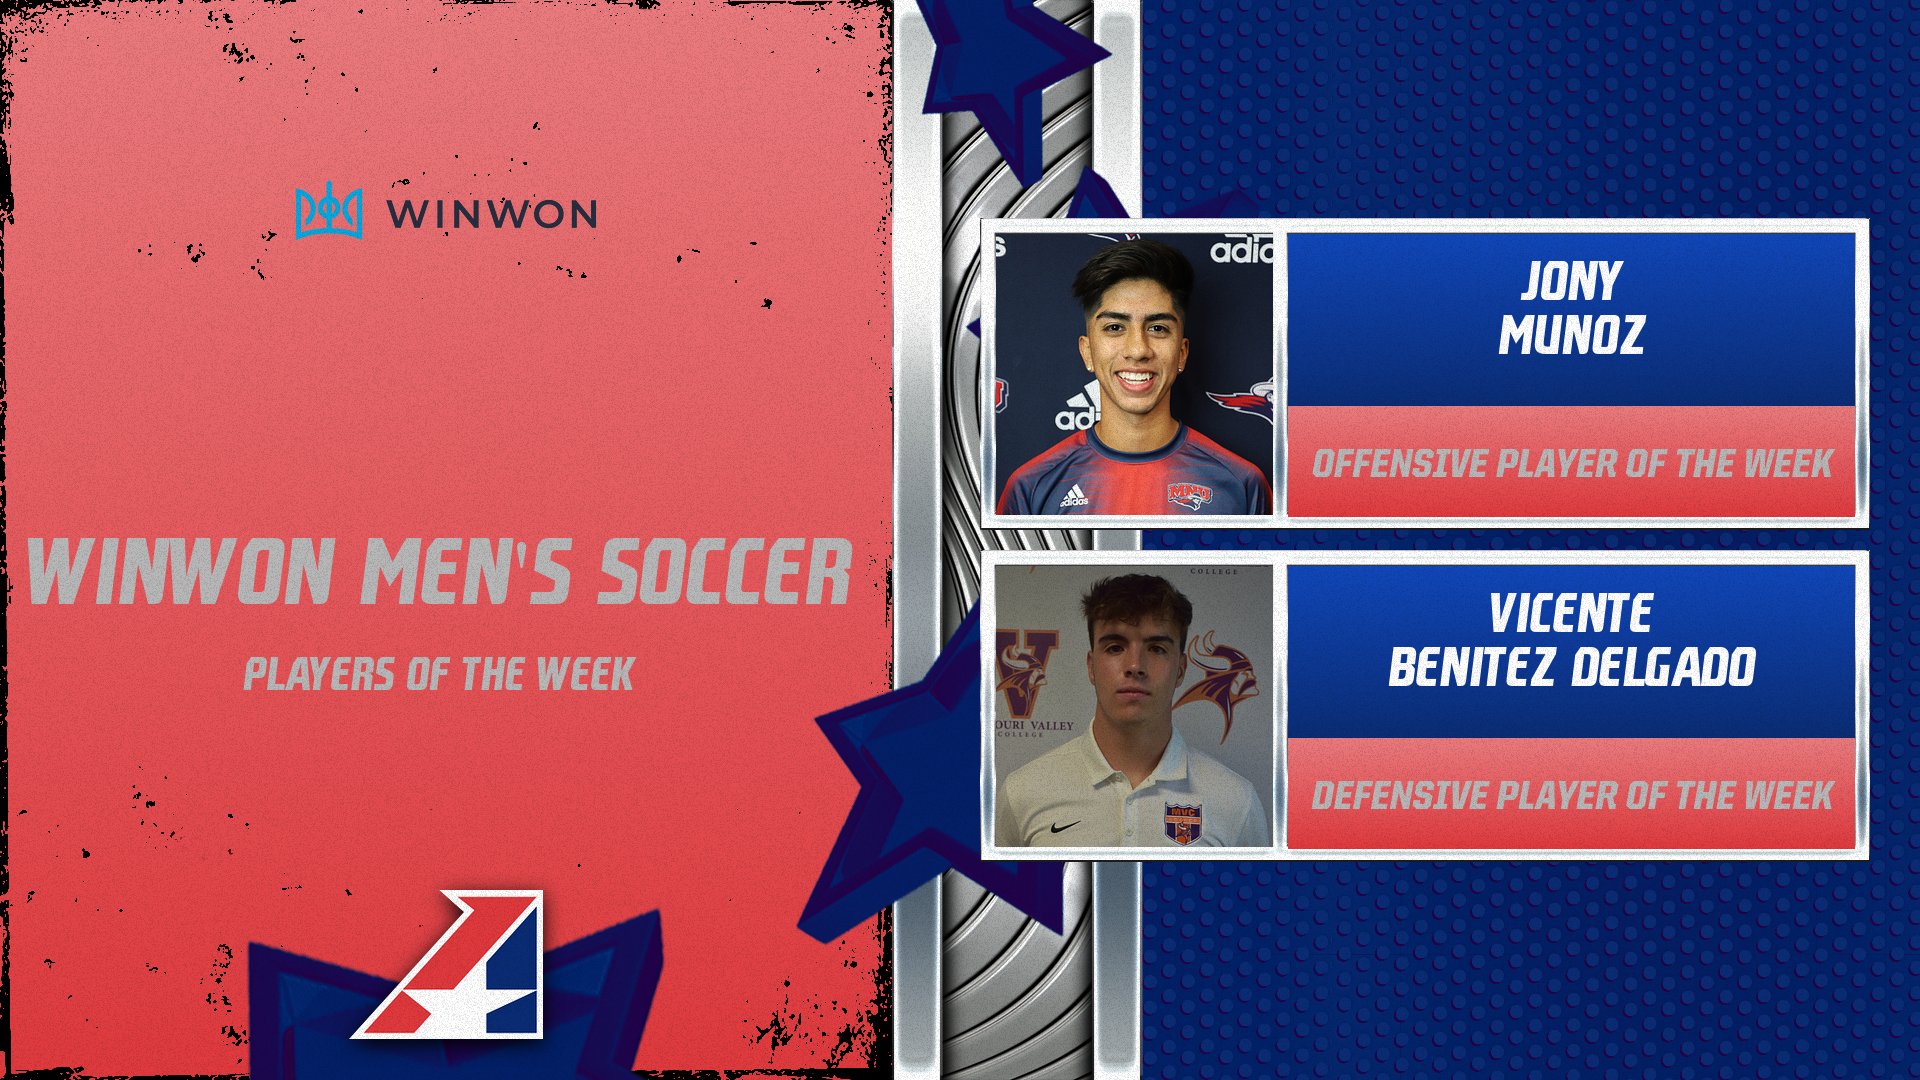 Heart Announces WinWon Men’s Soccer Players of the Week – September 18